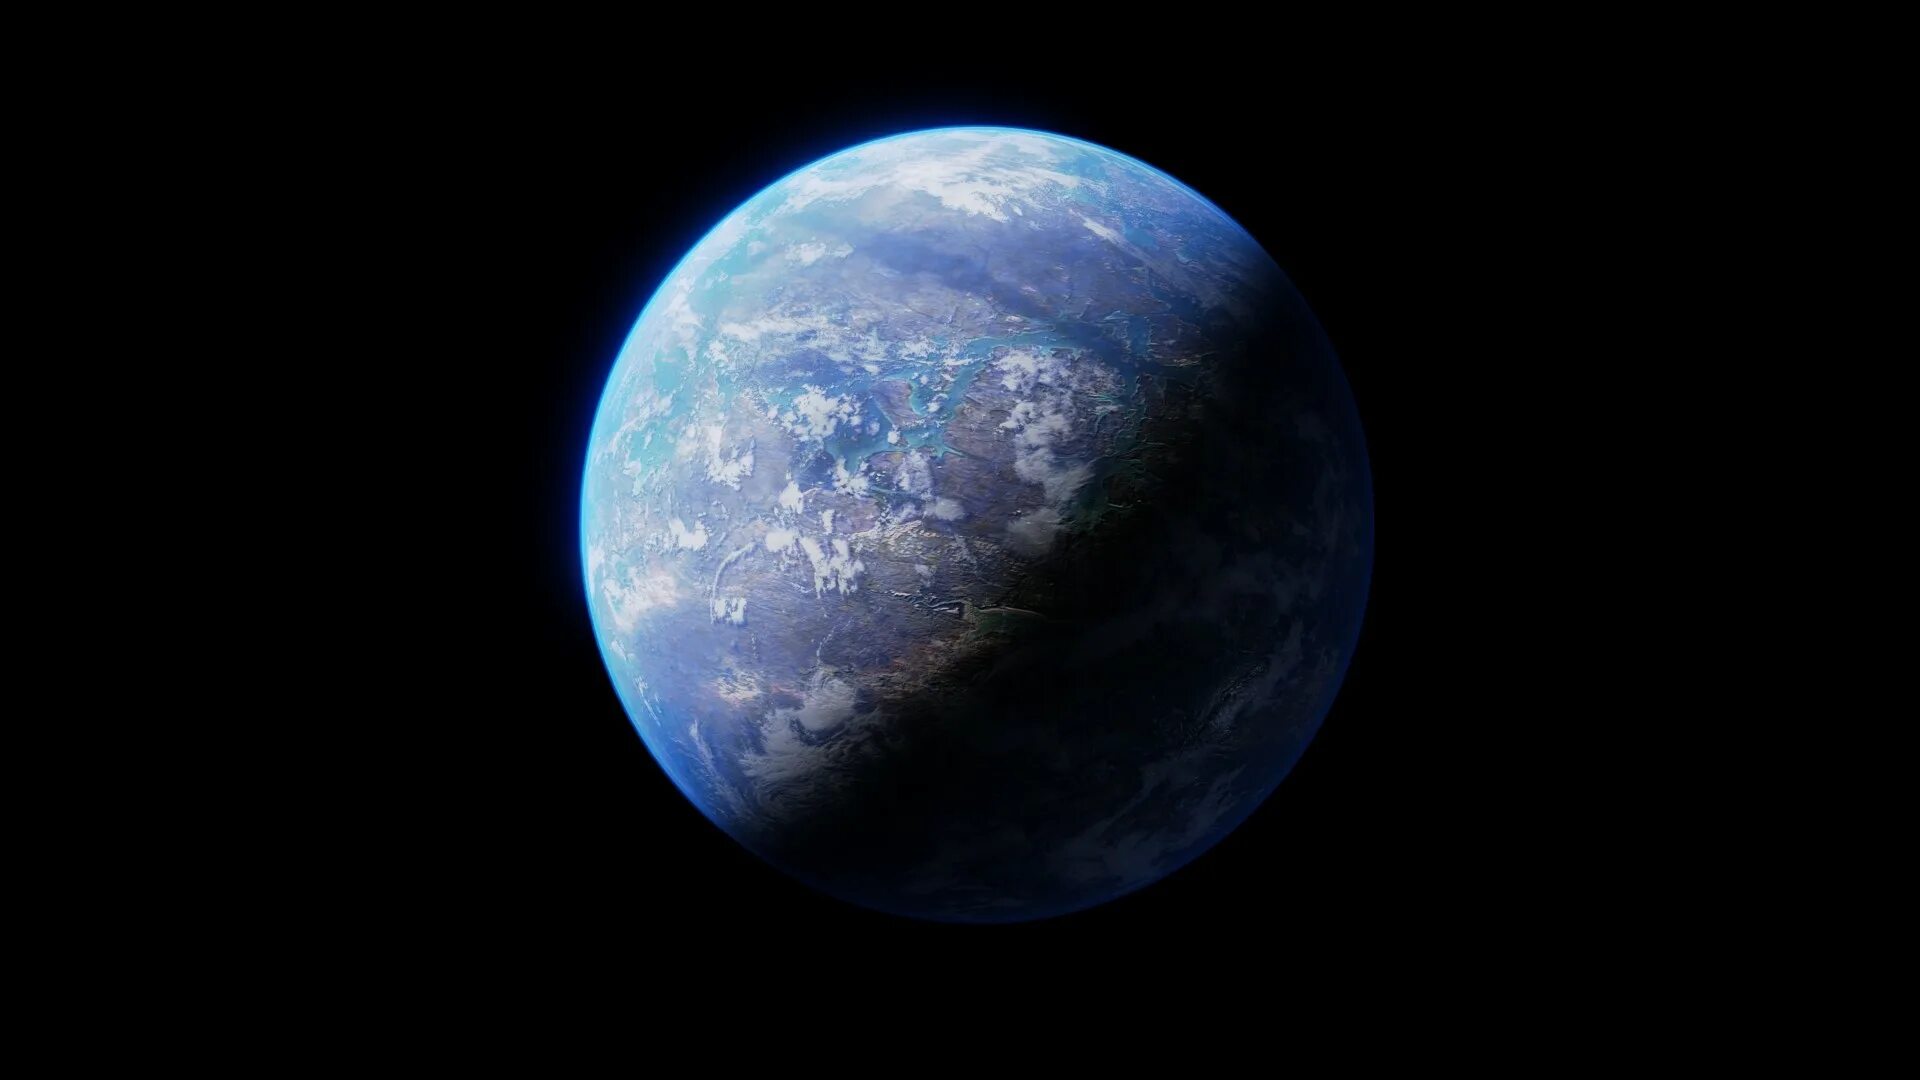 Планета океан. Планета Глизе 1214 b. GJ 1214 B (Глизе 1214 b). Планета океан gj1214b. Экзопланета gj1214b.